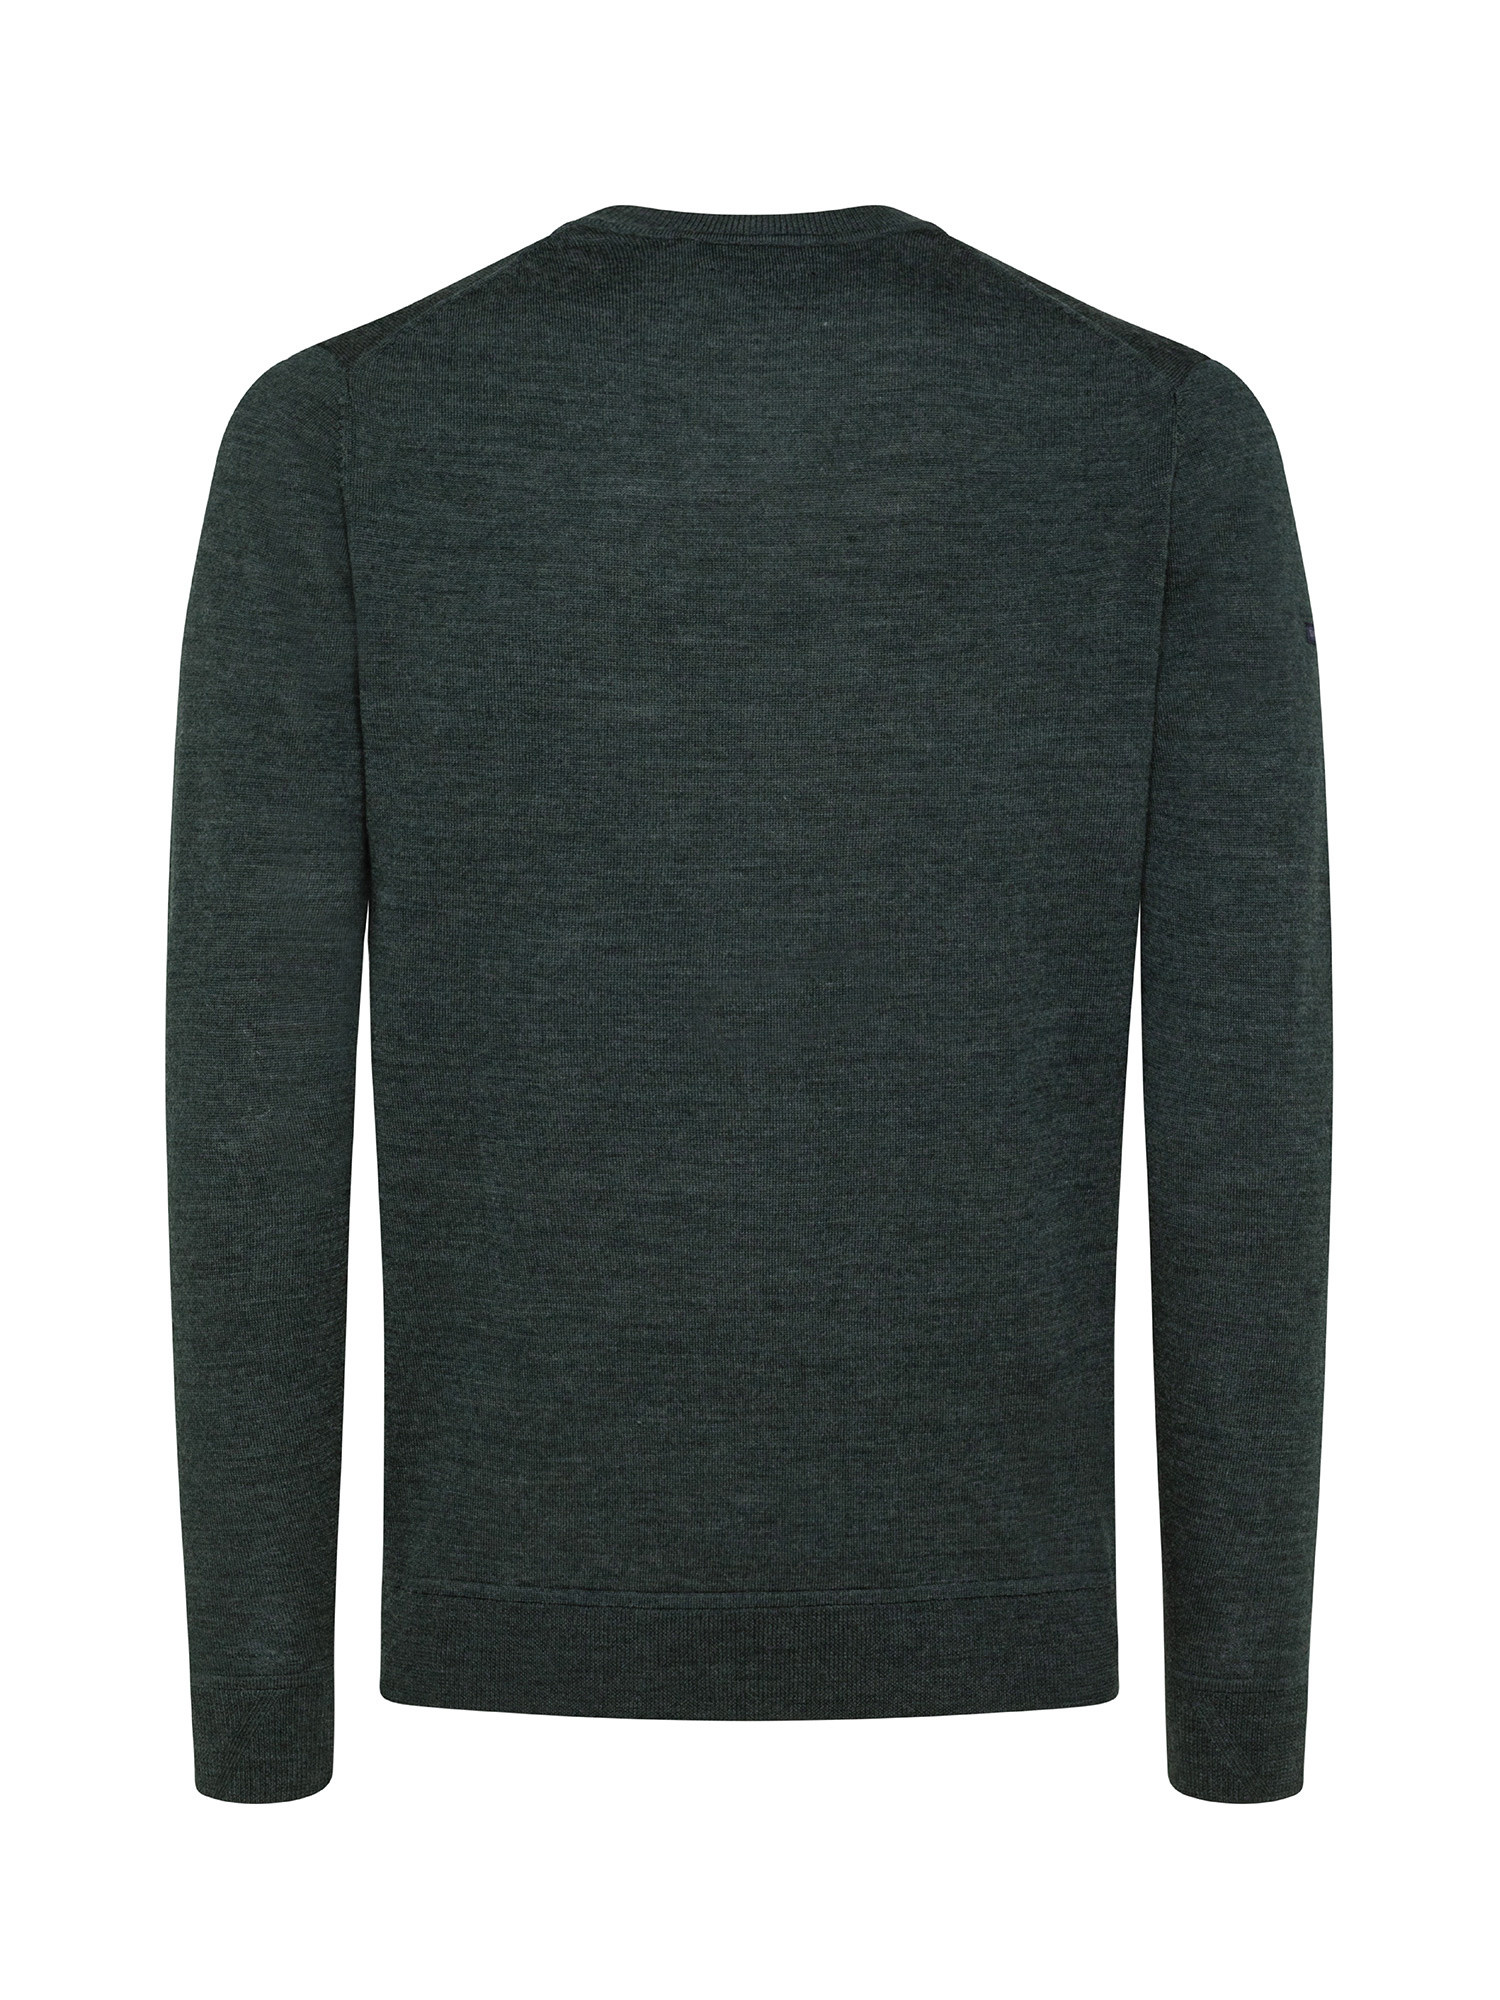 Superdry - Merino wool crewneck sweater, Green, large image number 1